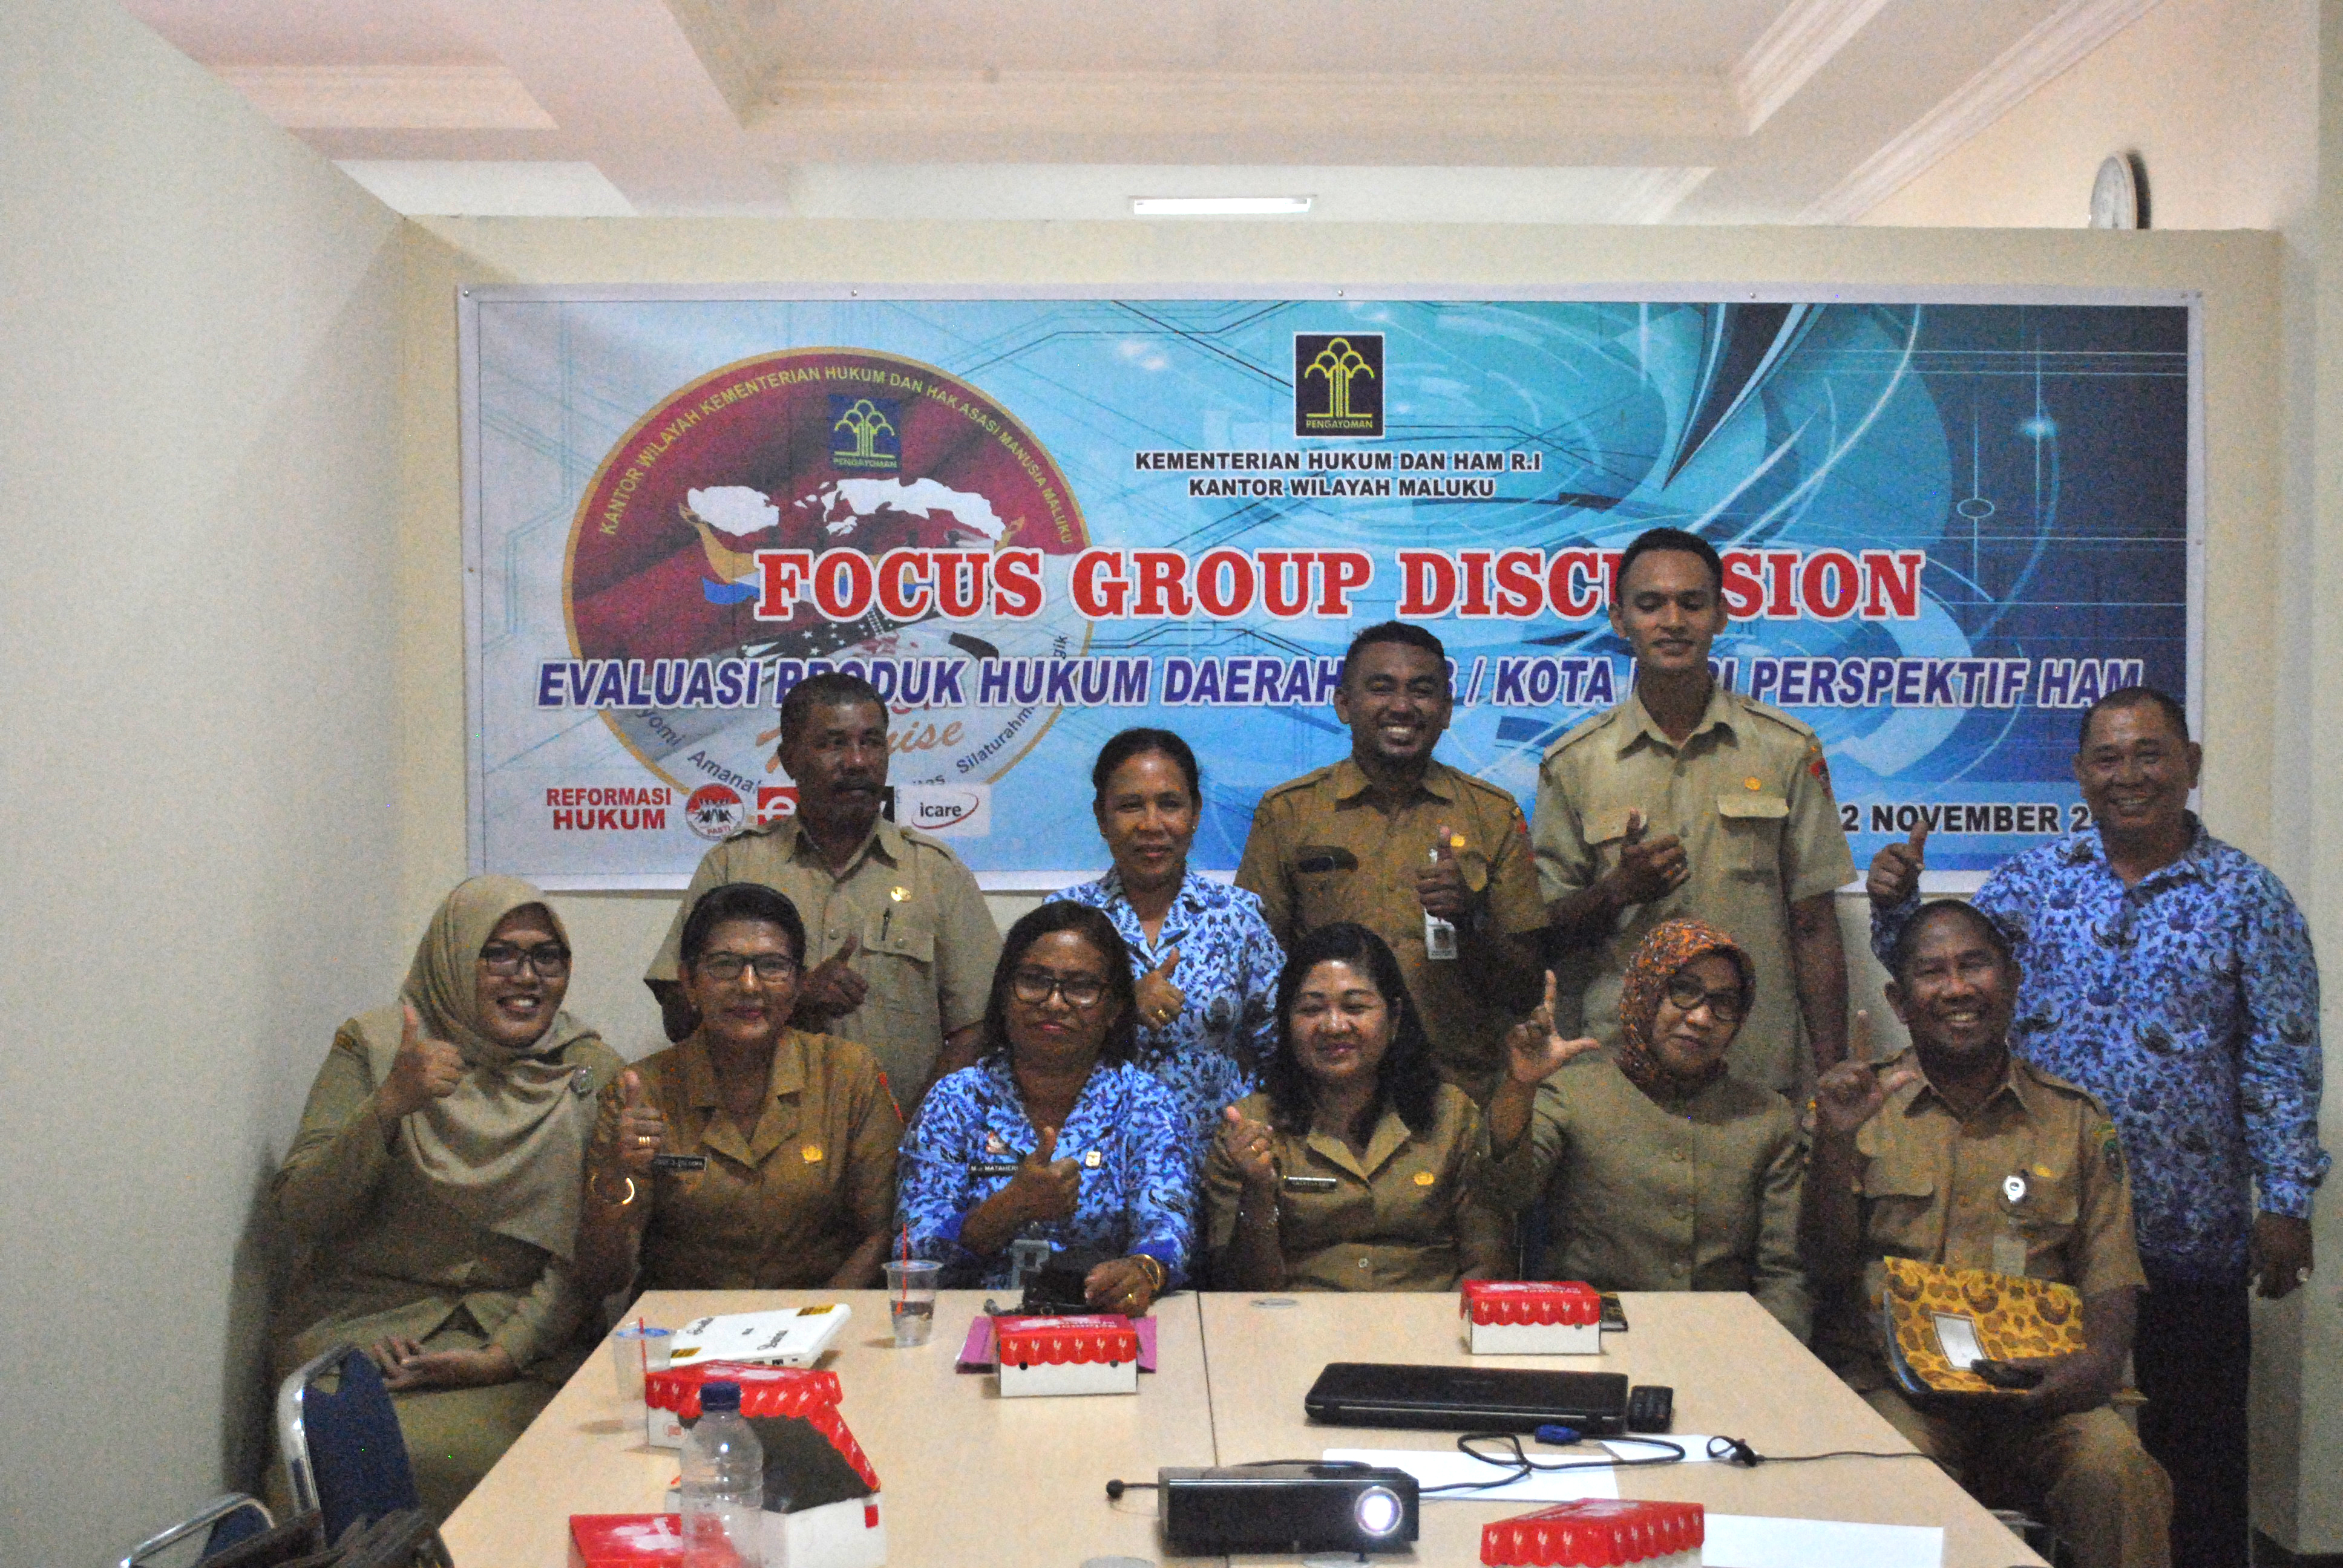 Focus Group Discussion Evaluasi Produk Hukum Daerah dari Prespektif HAM